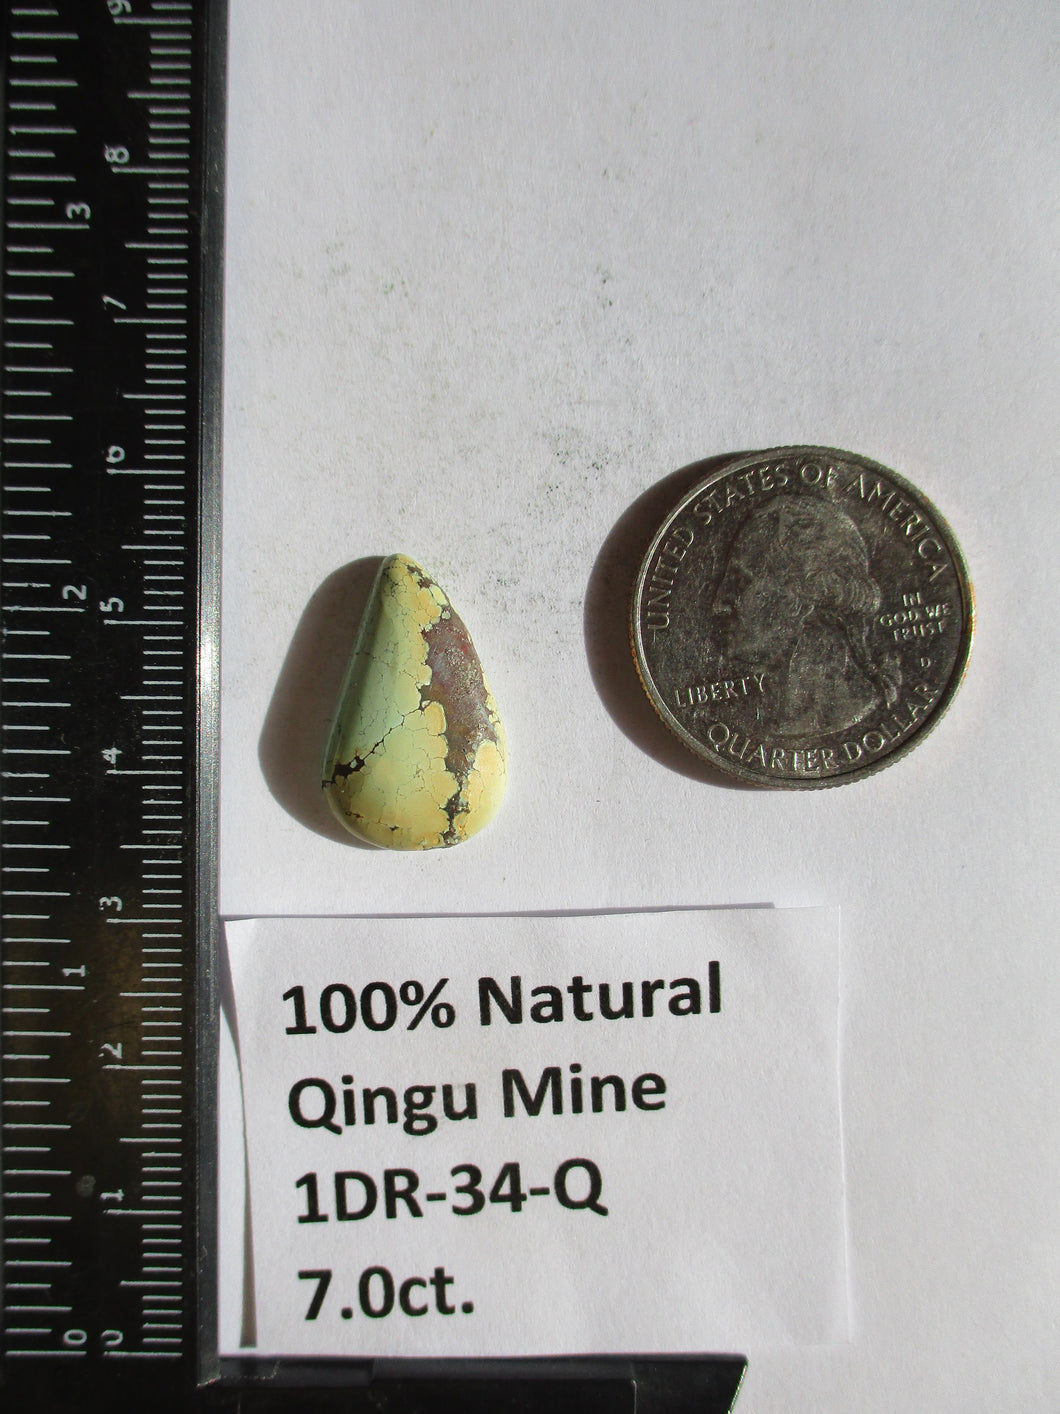 7.0 ct. (21x13x4.5 mm) 100% Natural Qingu Mine (Hubei) Turquoise Cabochon Gemstone, # 1DR 34